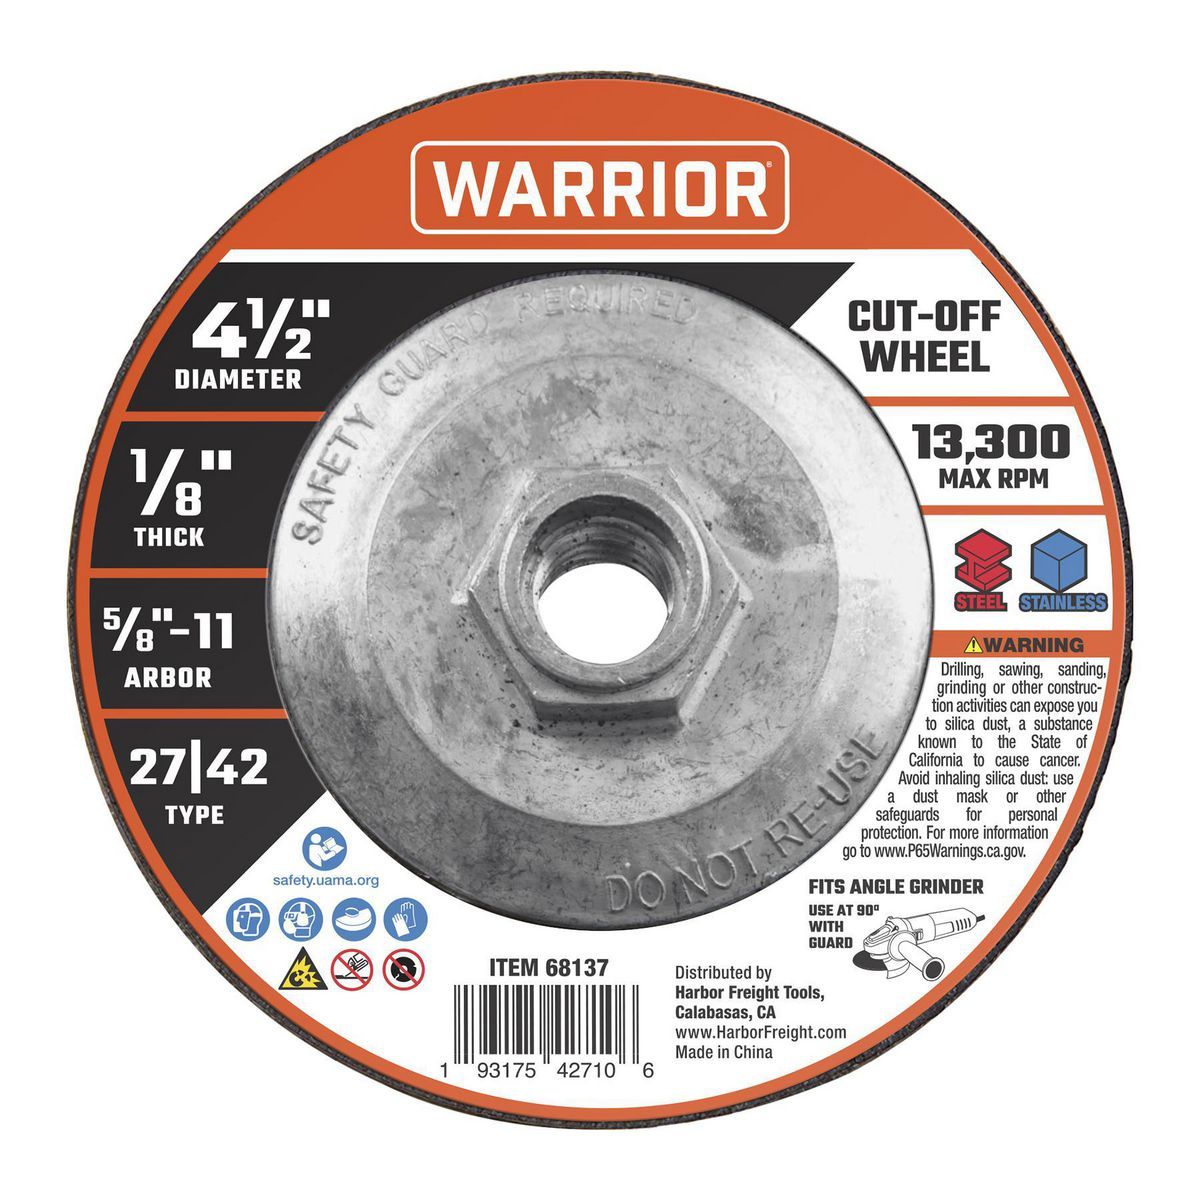 WARRIOR 4-1/2 in. x 1/8 in. x 5/8 in. Type 27/42 Metal Cut-off Wheel